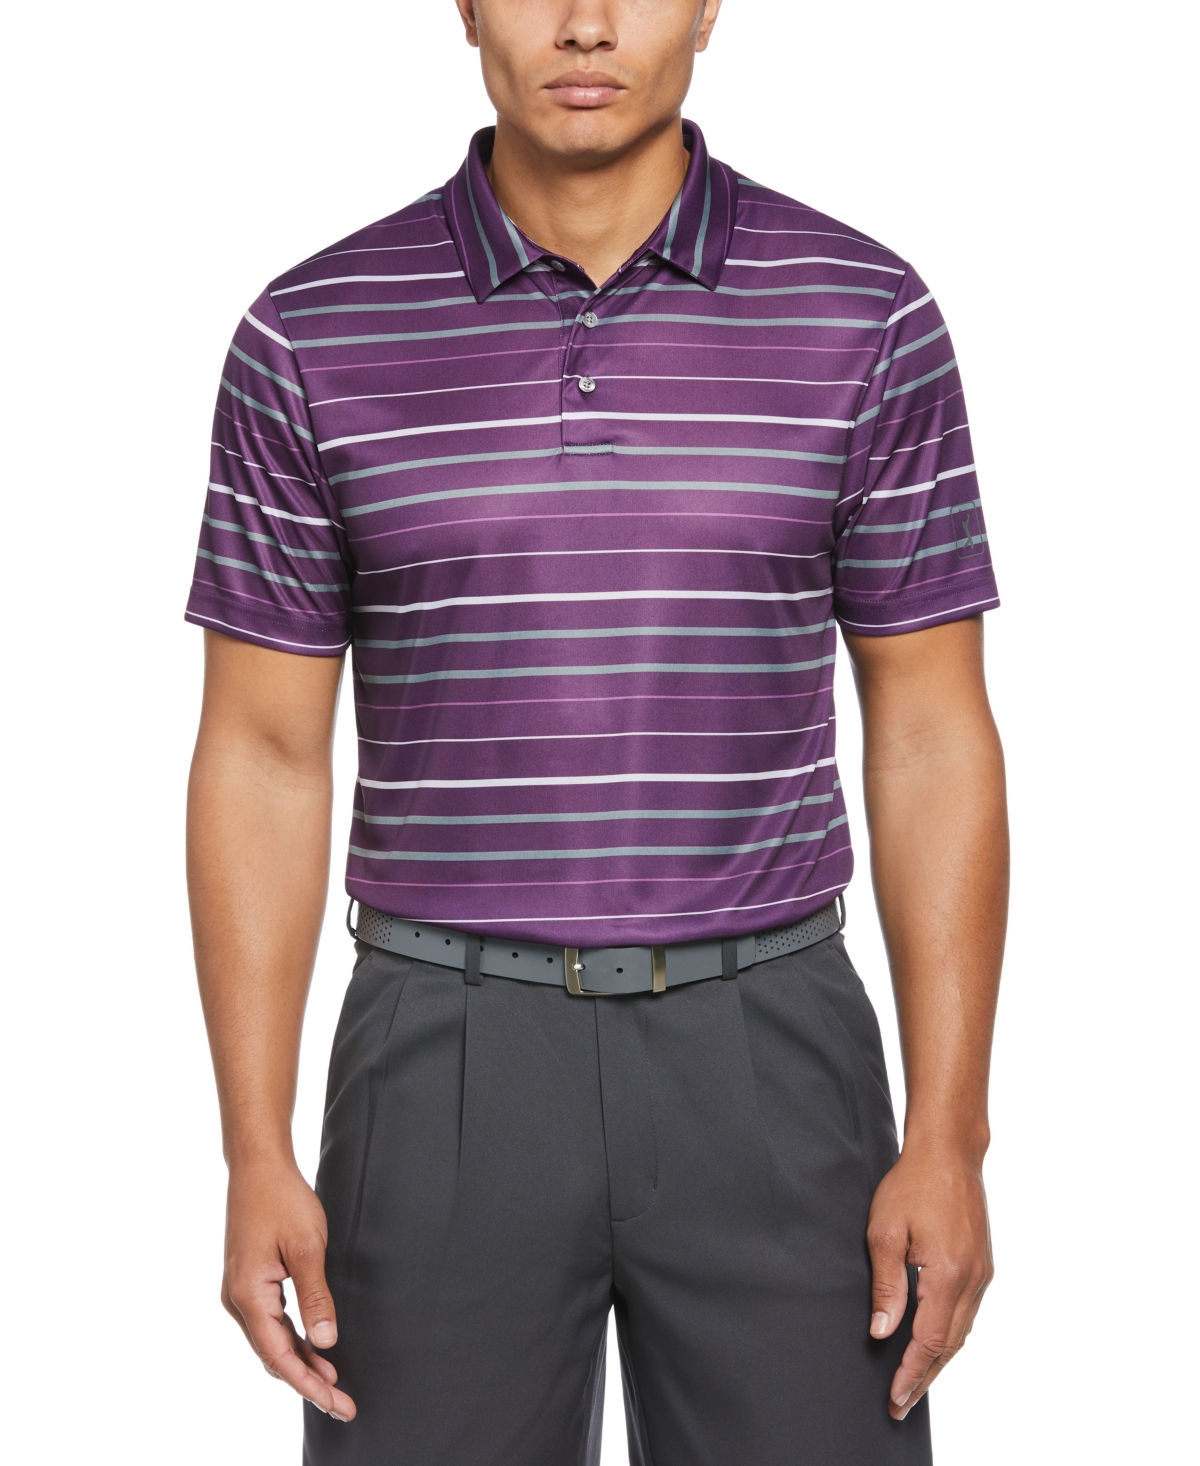 Men's Fine Line Print Short Sleeve Golf Polo Shirt - Grape Royale